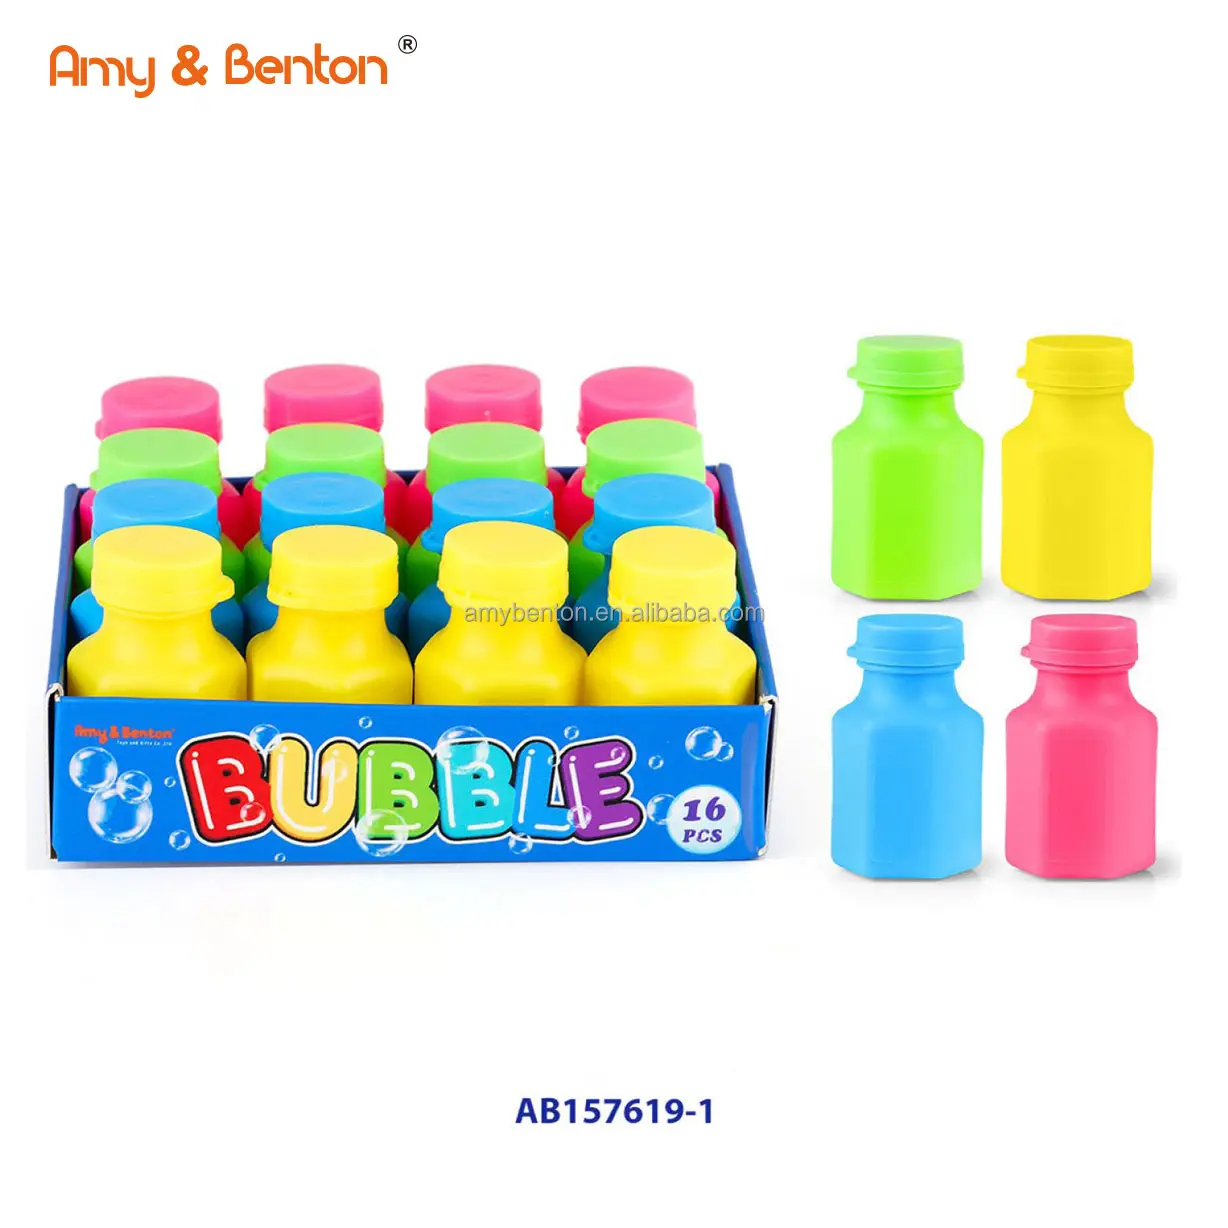 Mini Bubbles Wand Colorful Classical Bottles 0.6 oz Children Party Favors Bubble Toys Kids Outdoor Games Summer Toy Party Bubble